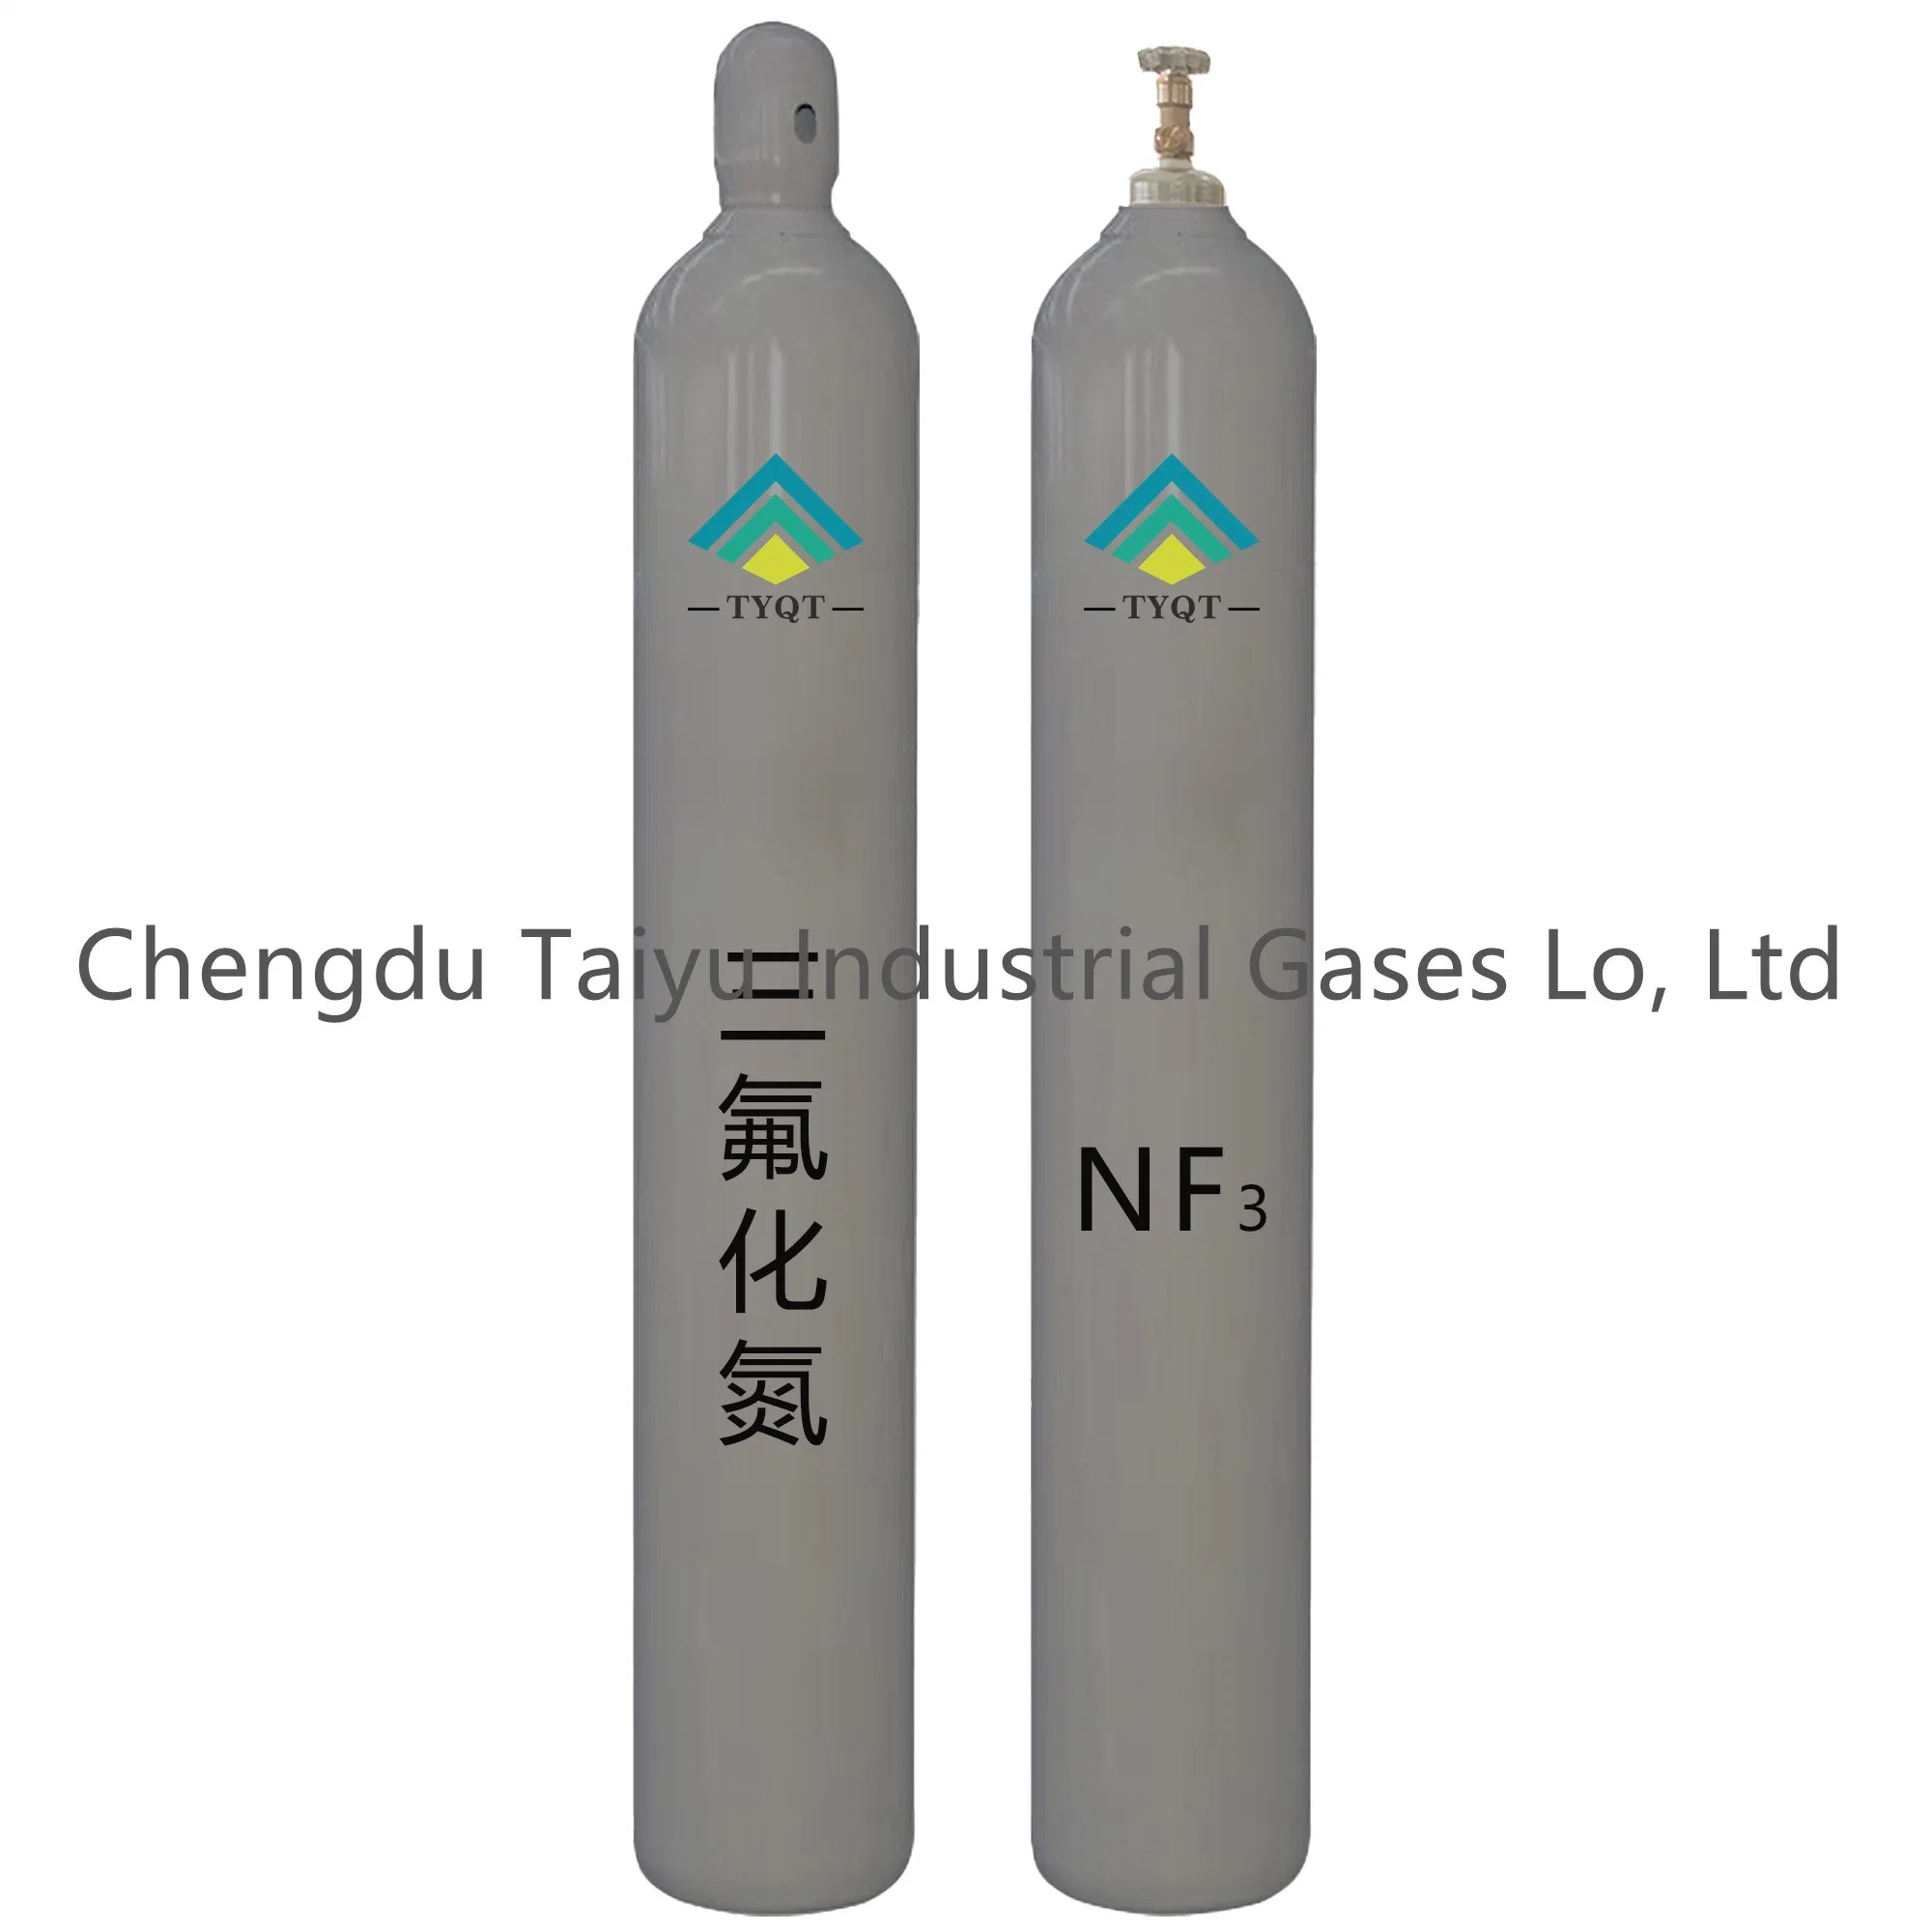 Cilindro de 47 L com gás NF3 Trifluoreto de azoto líquido de grau electrónico a 99.99%